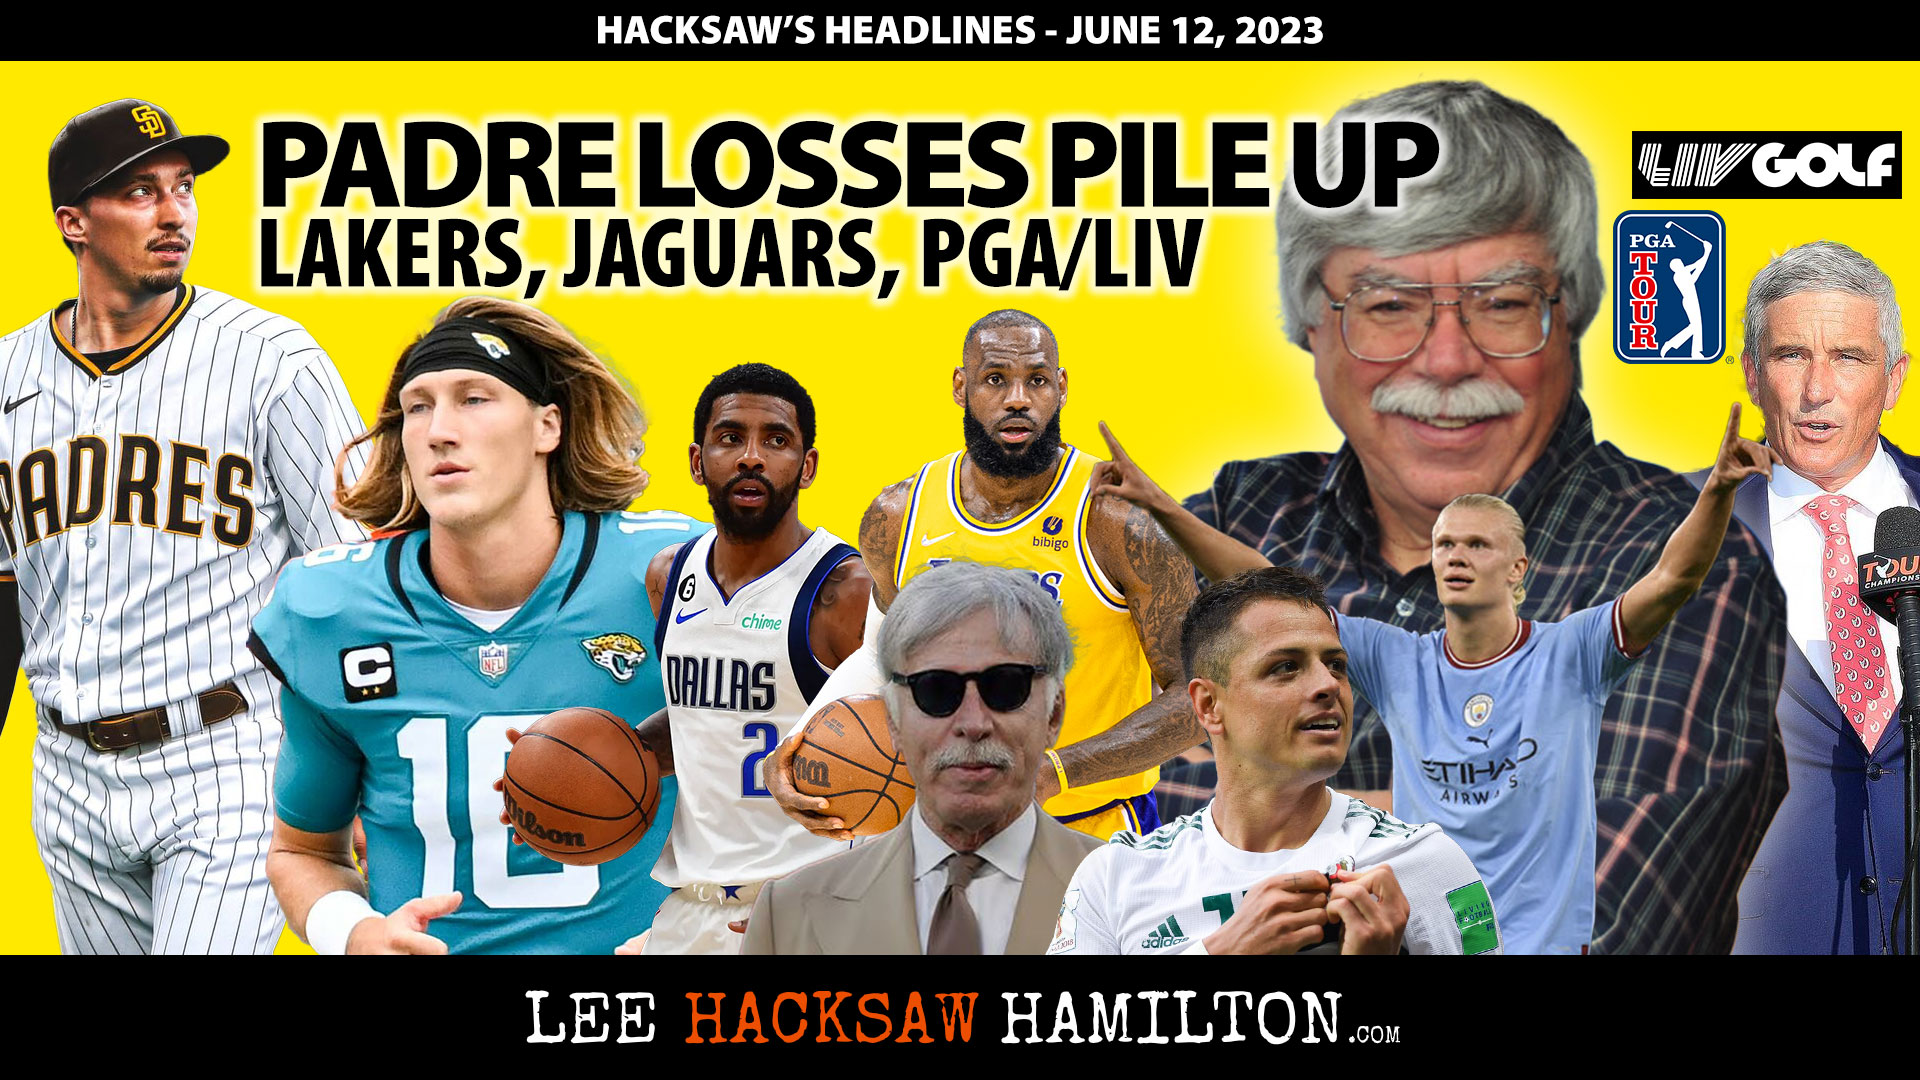 Lee Hacksaw Hamilton discusses Padres Bad Losses, Lakers, NBA News, Jaguars, NCAA, PGA/LIV, Stan Kroenke, San Diego Sports Arena